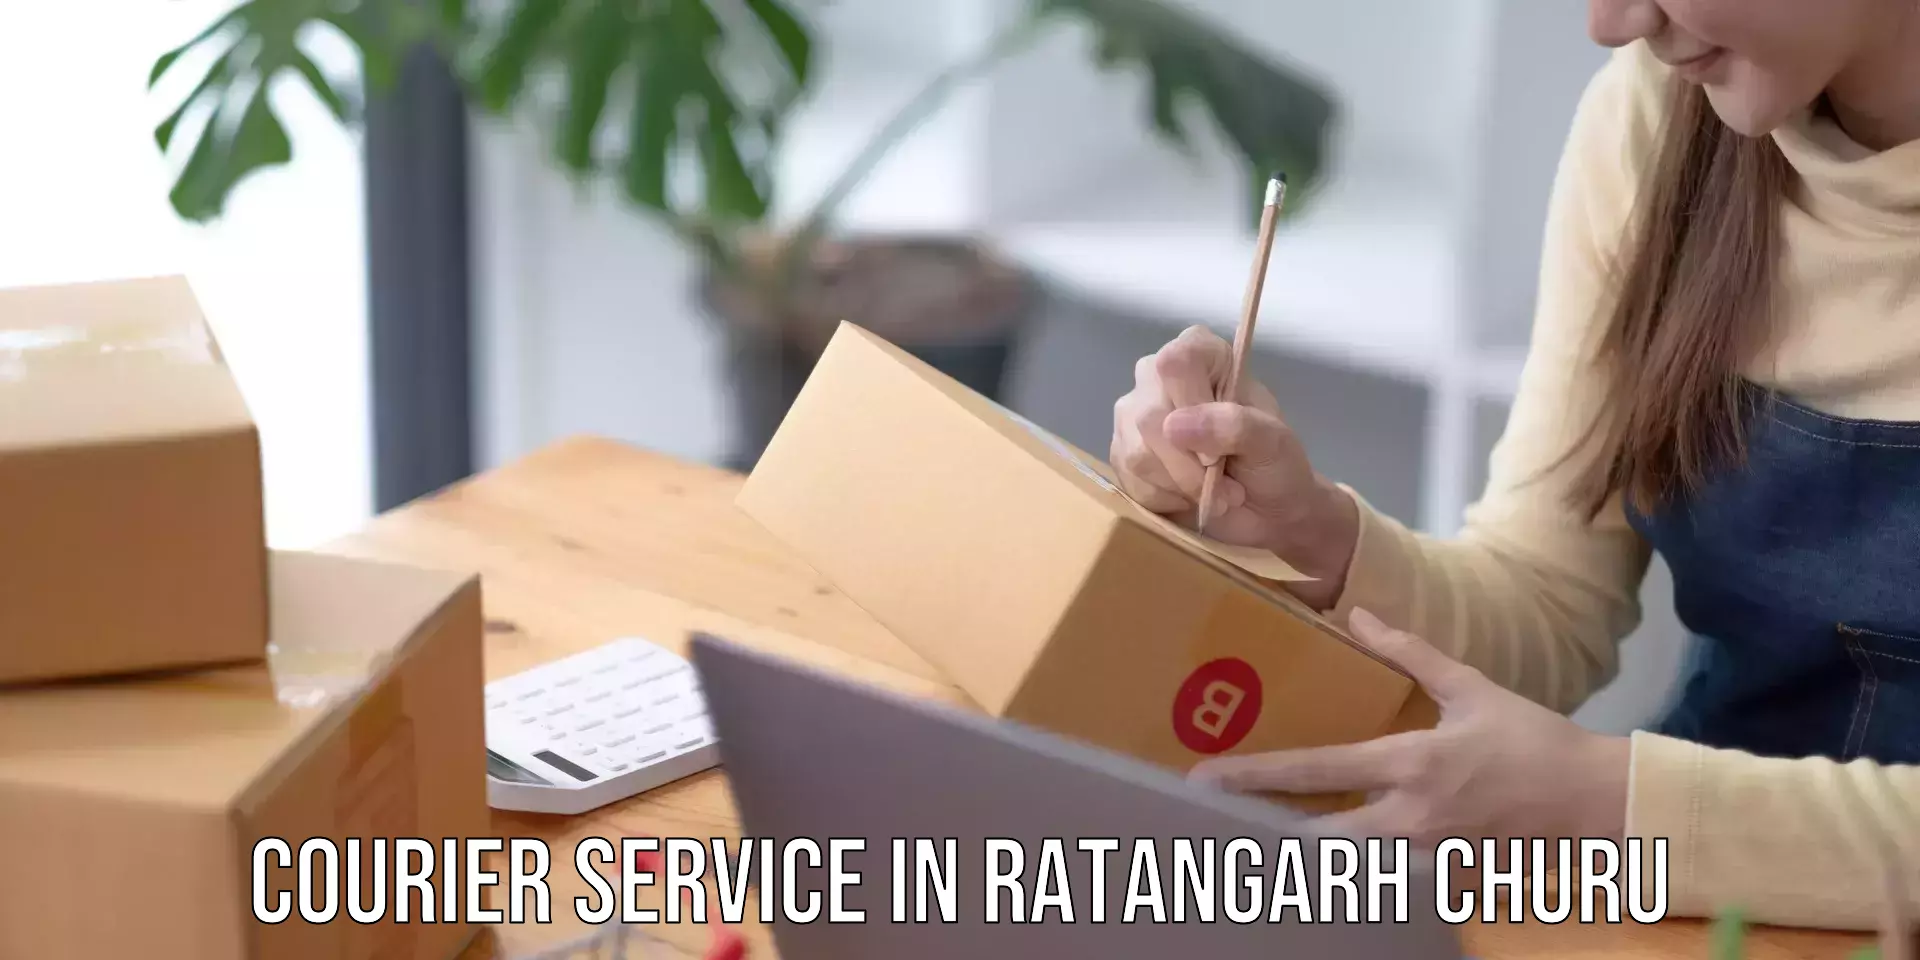 Advanced package delivery in Ratangarh Churu